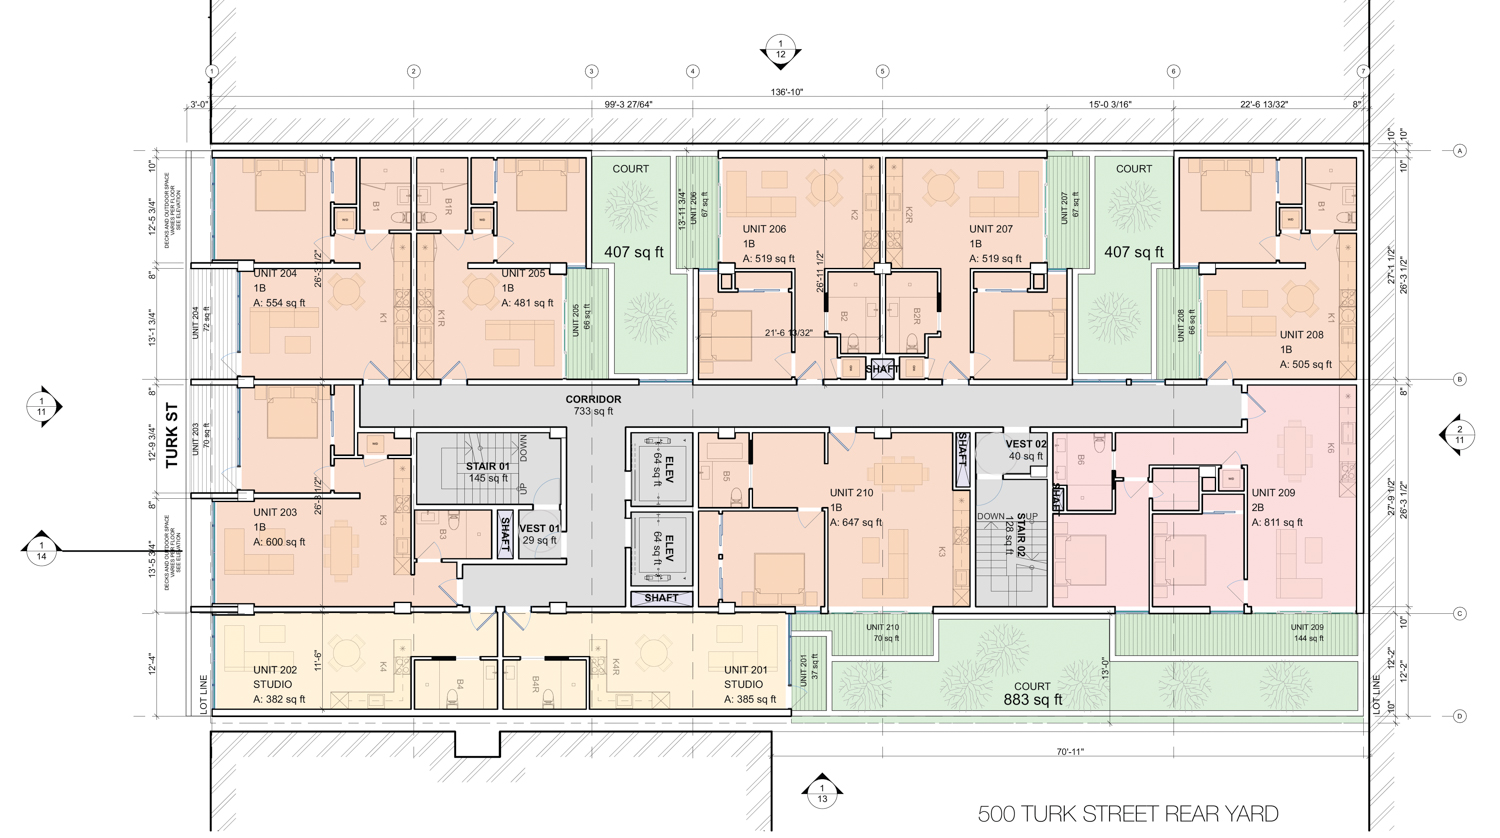 530 Turk Street second-level floor plan, illustration by RG Architecture